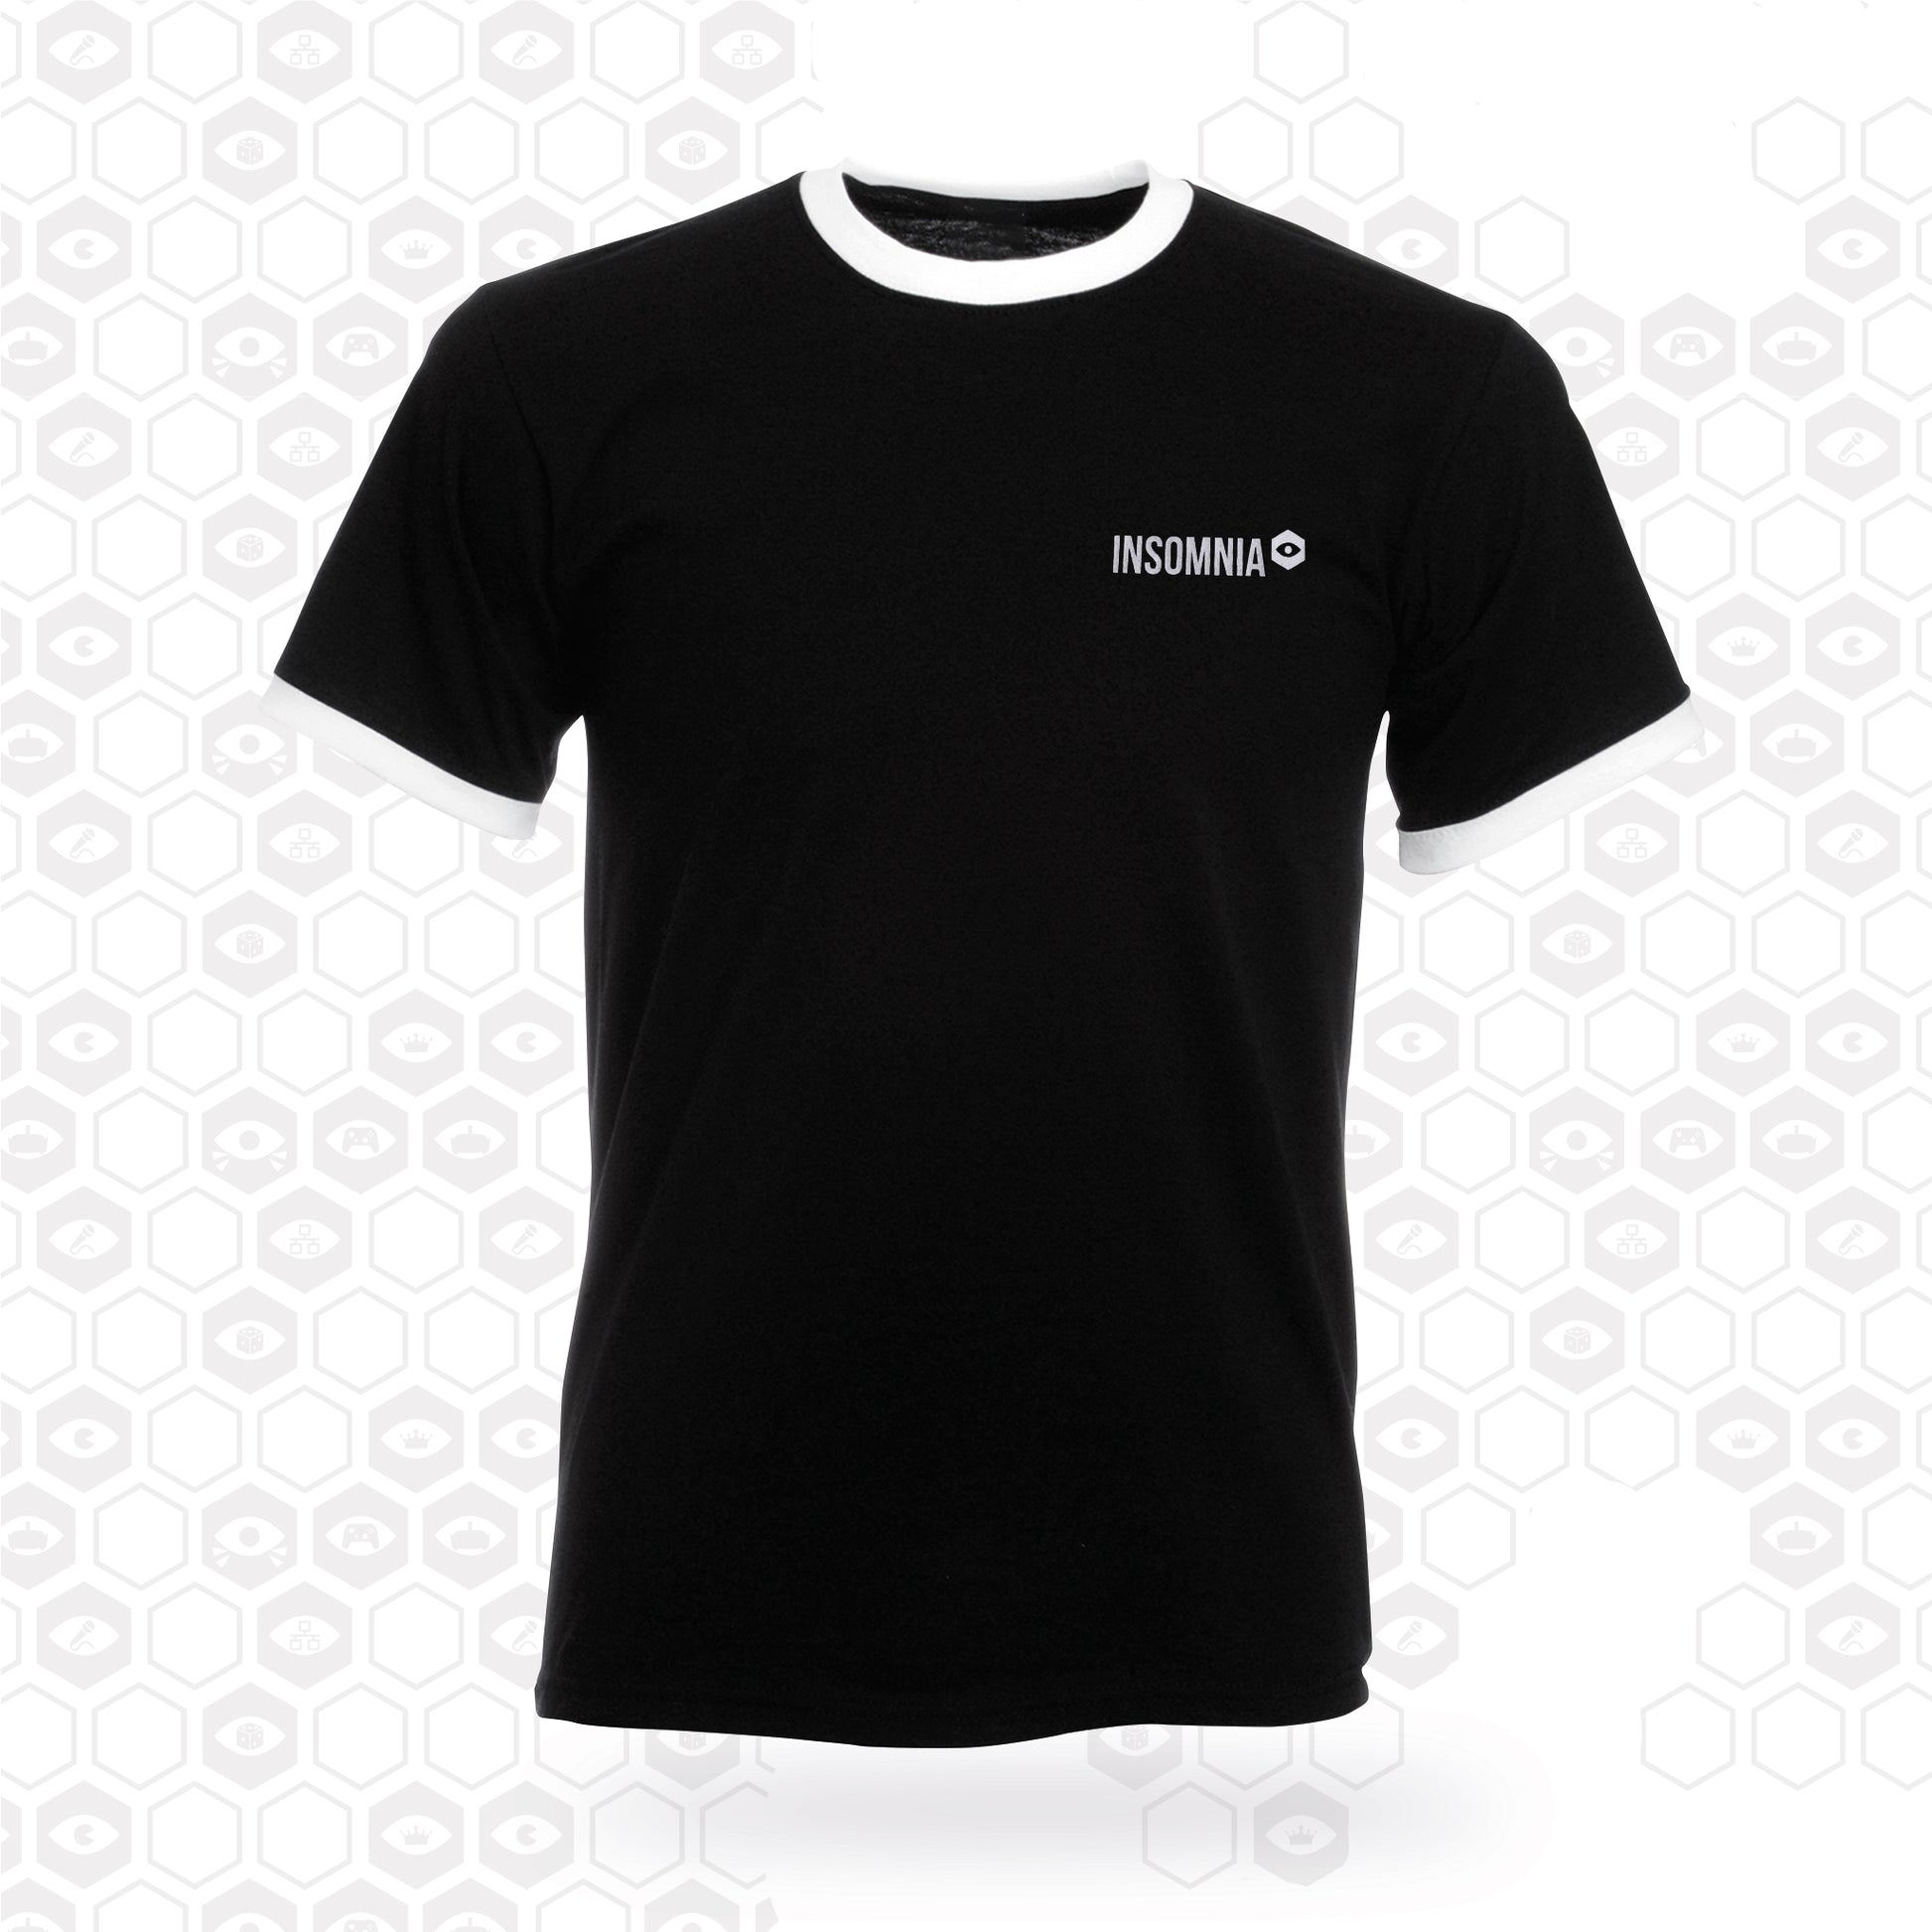 Classic insomnic logo ringer t-shirt - black with white trim